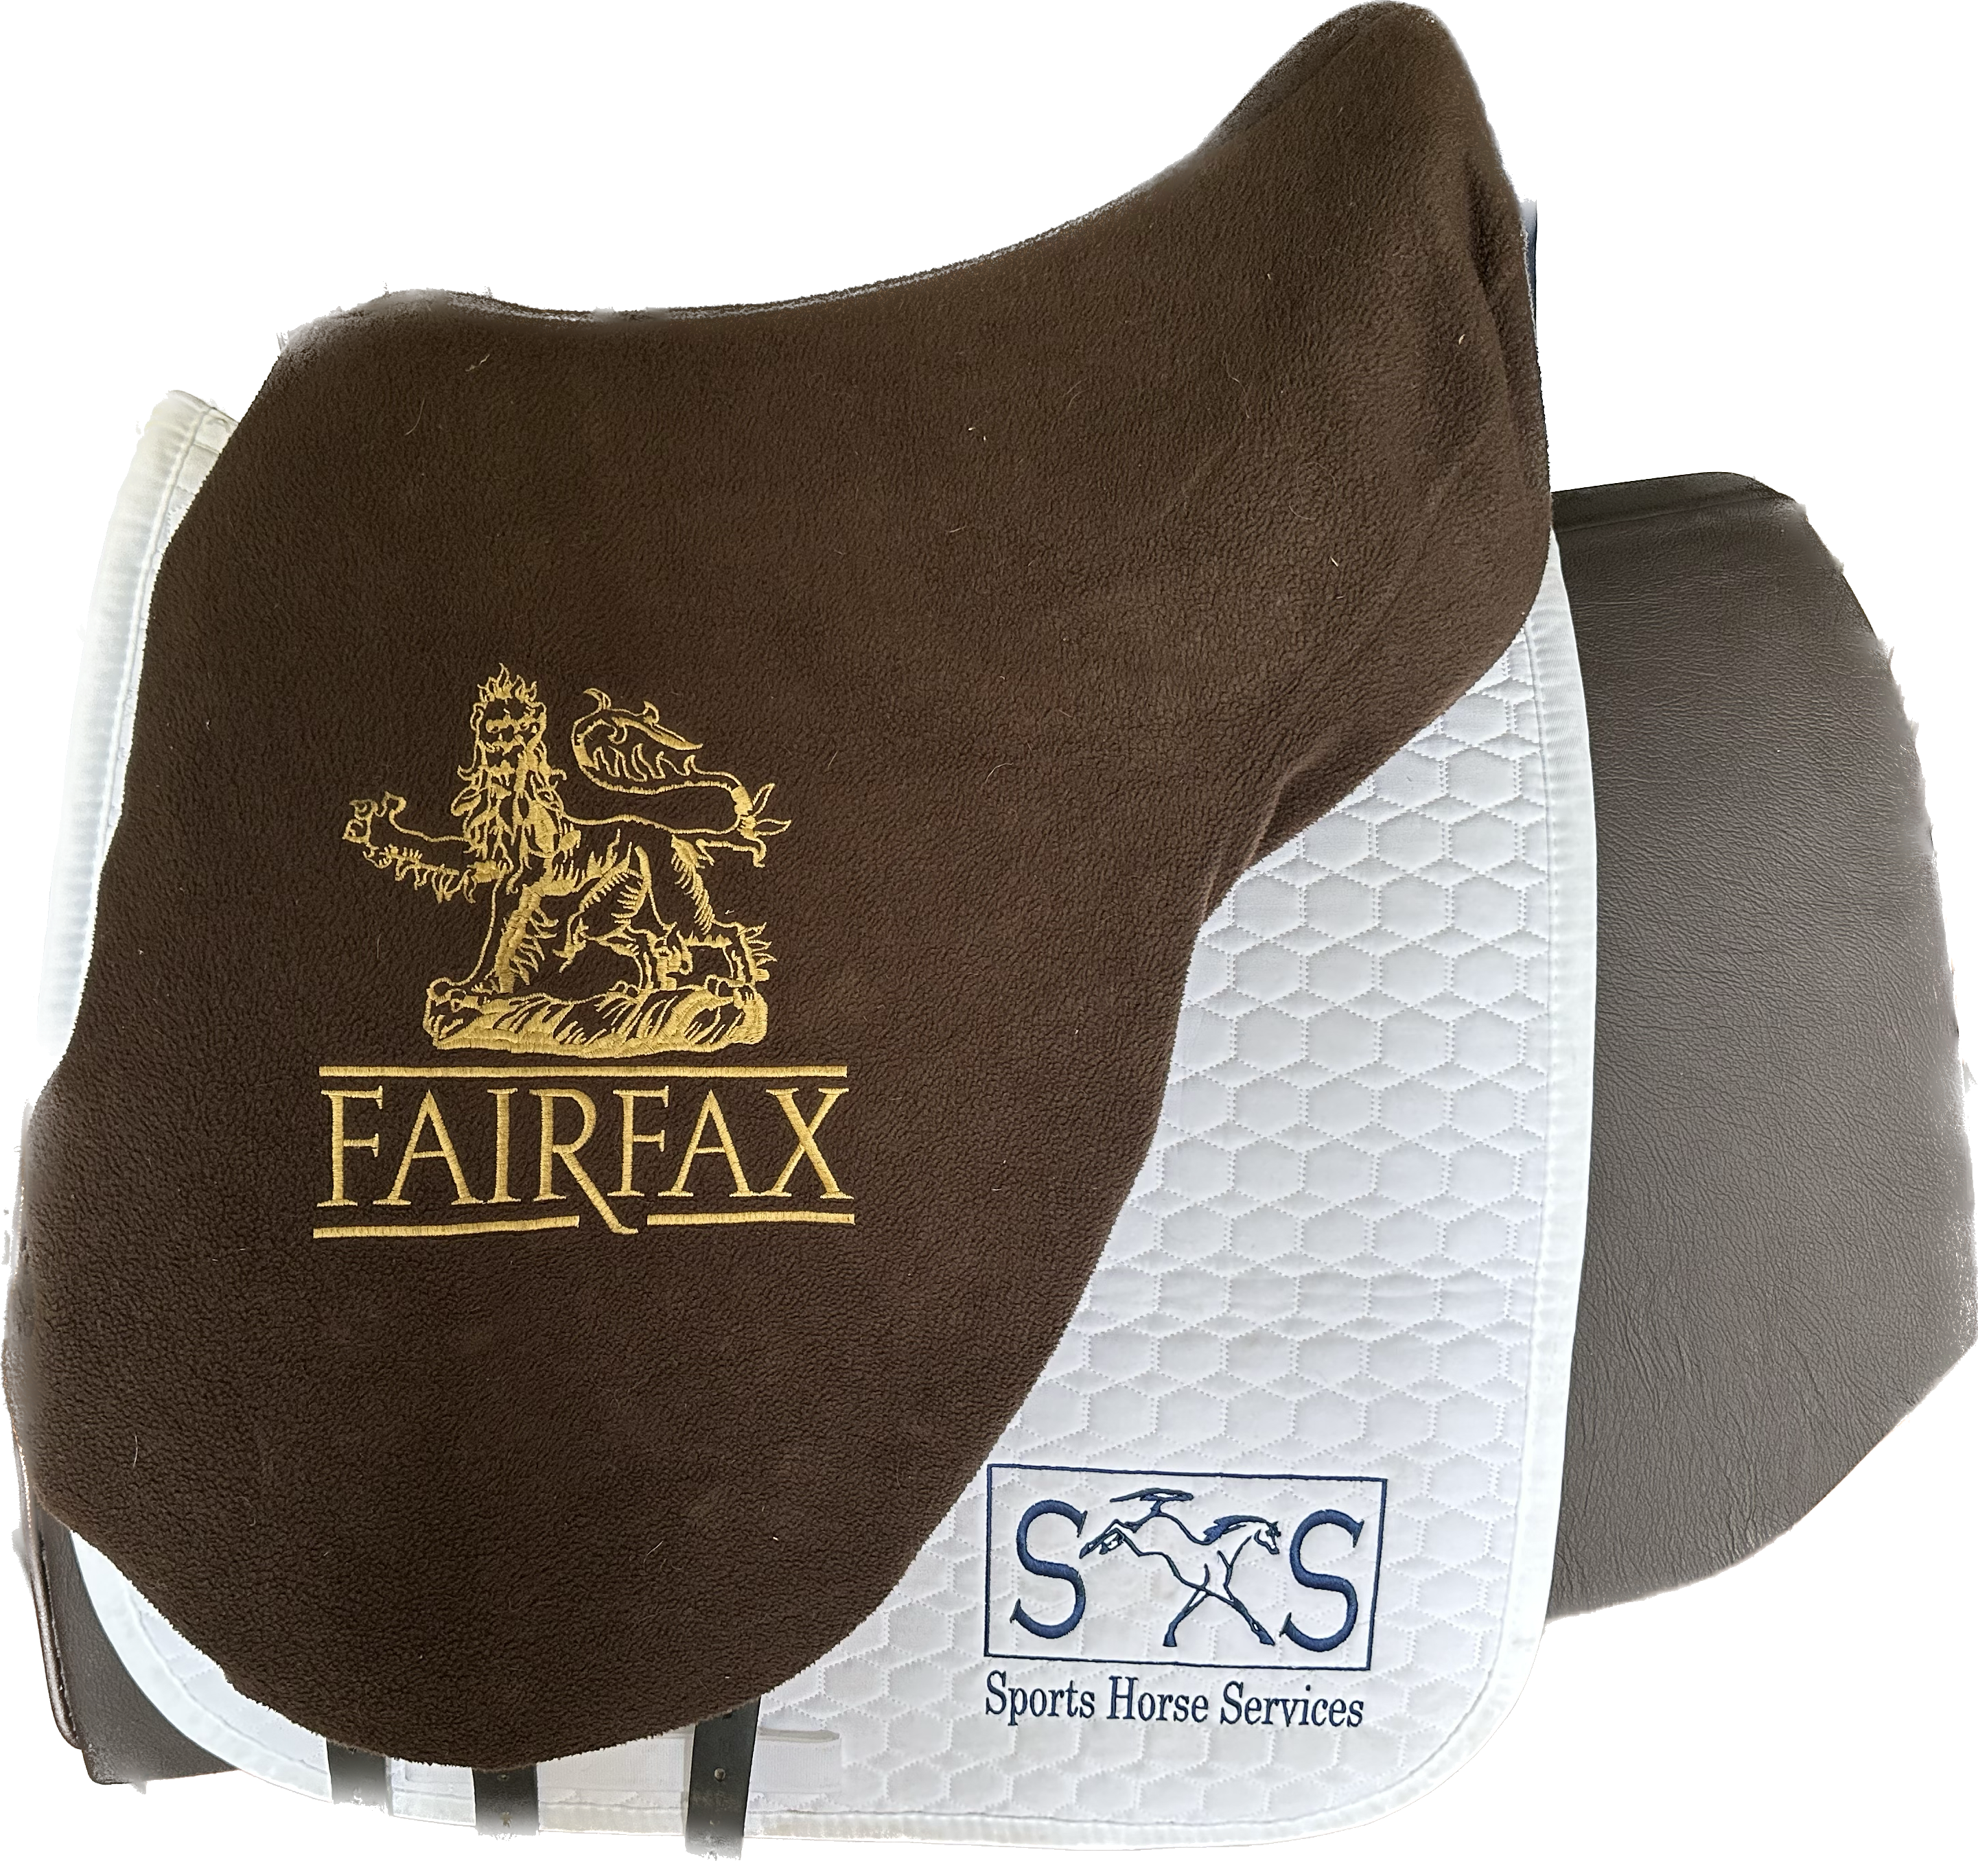 Fairfax Petite Classic Dressage Saddle 16.5 "  Black - In excellent condition USED